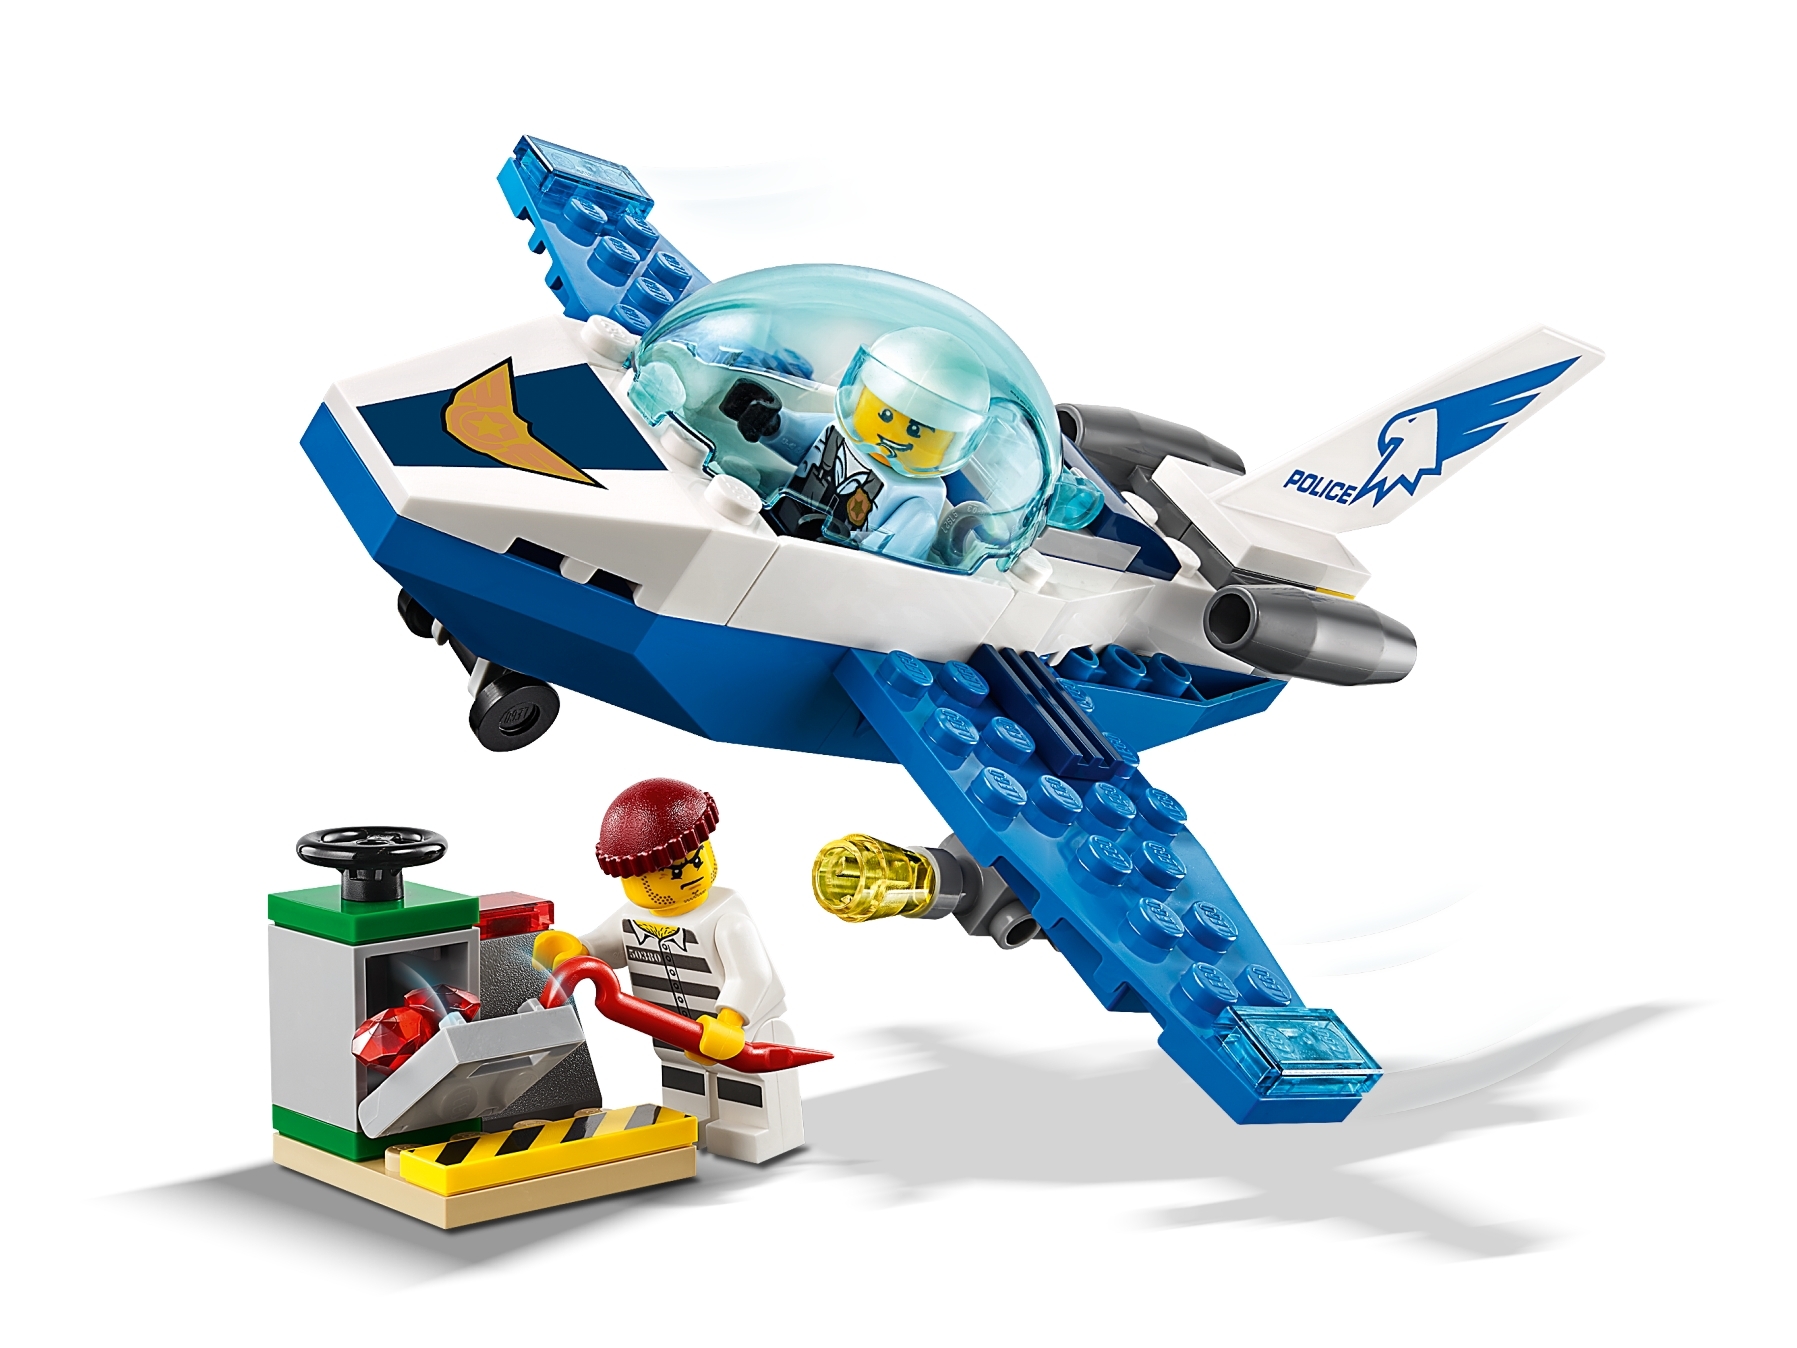 Lego City avion - Lego